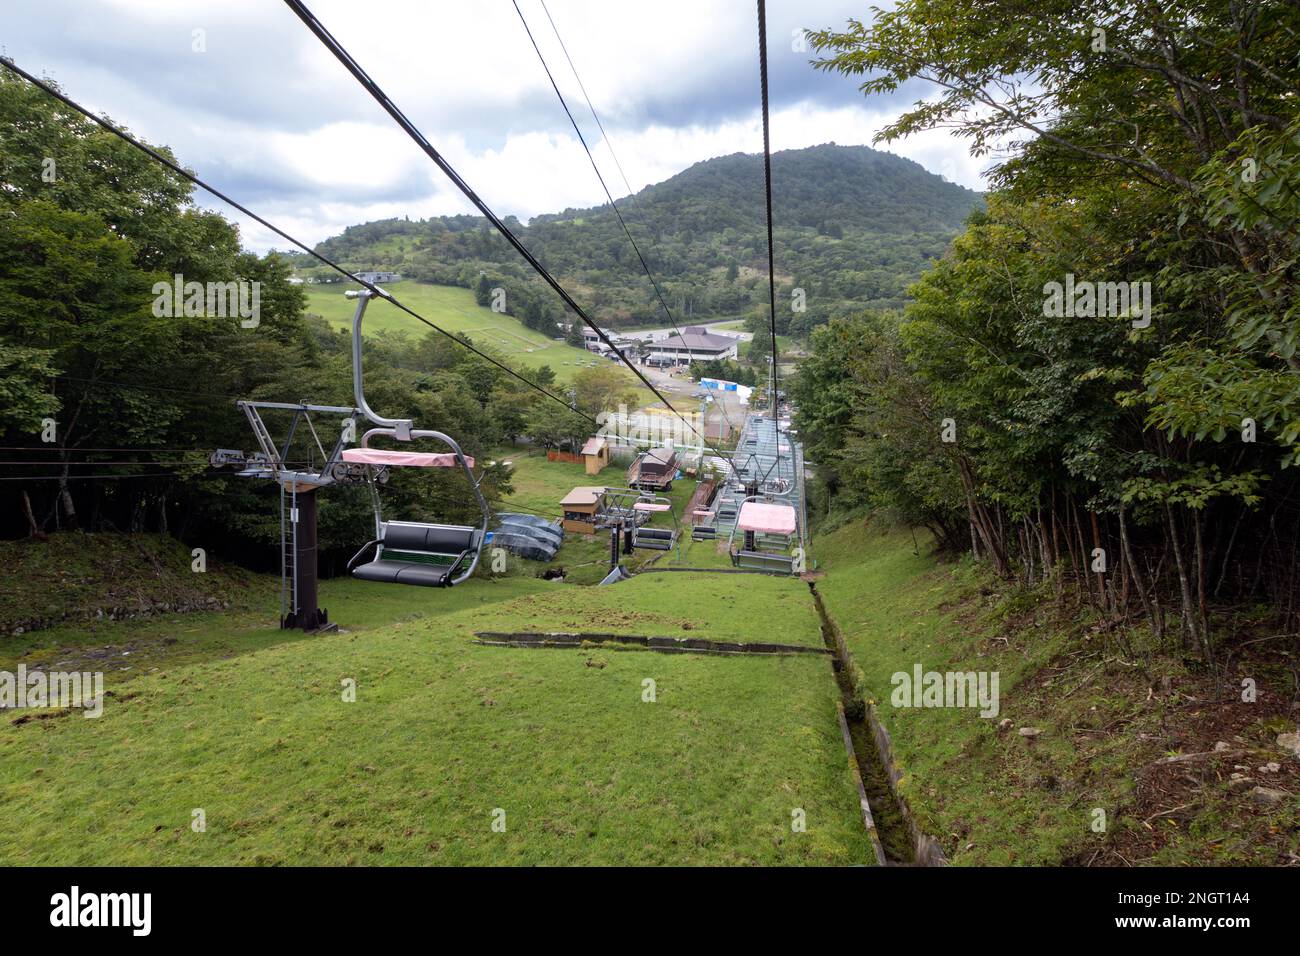 Ropeway to the top of the Mountain Chausu, Aichi, Japan. Stock Photo